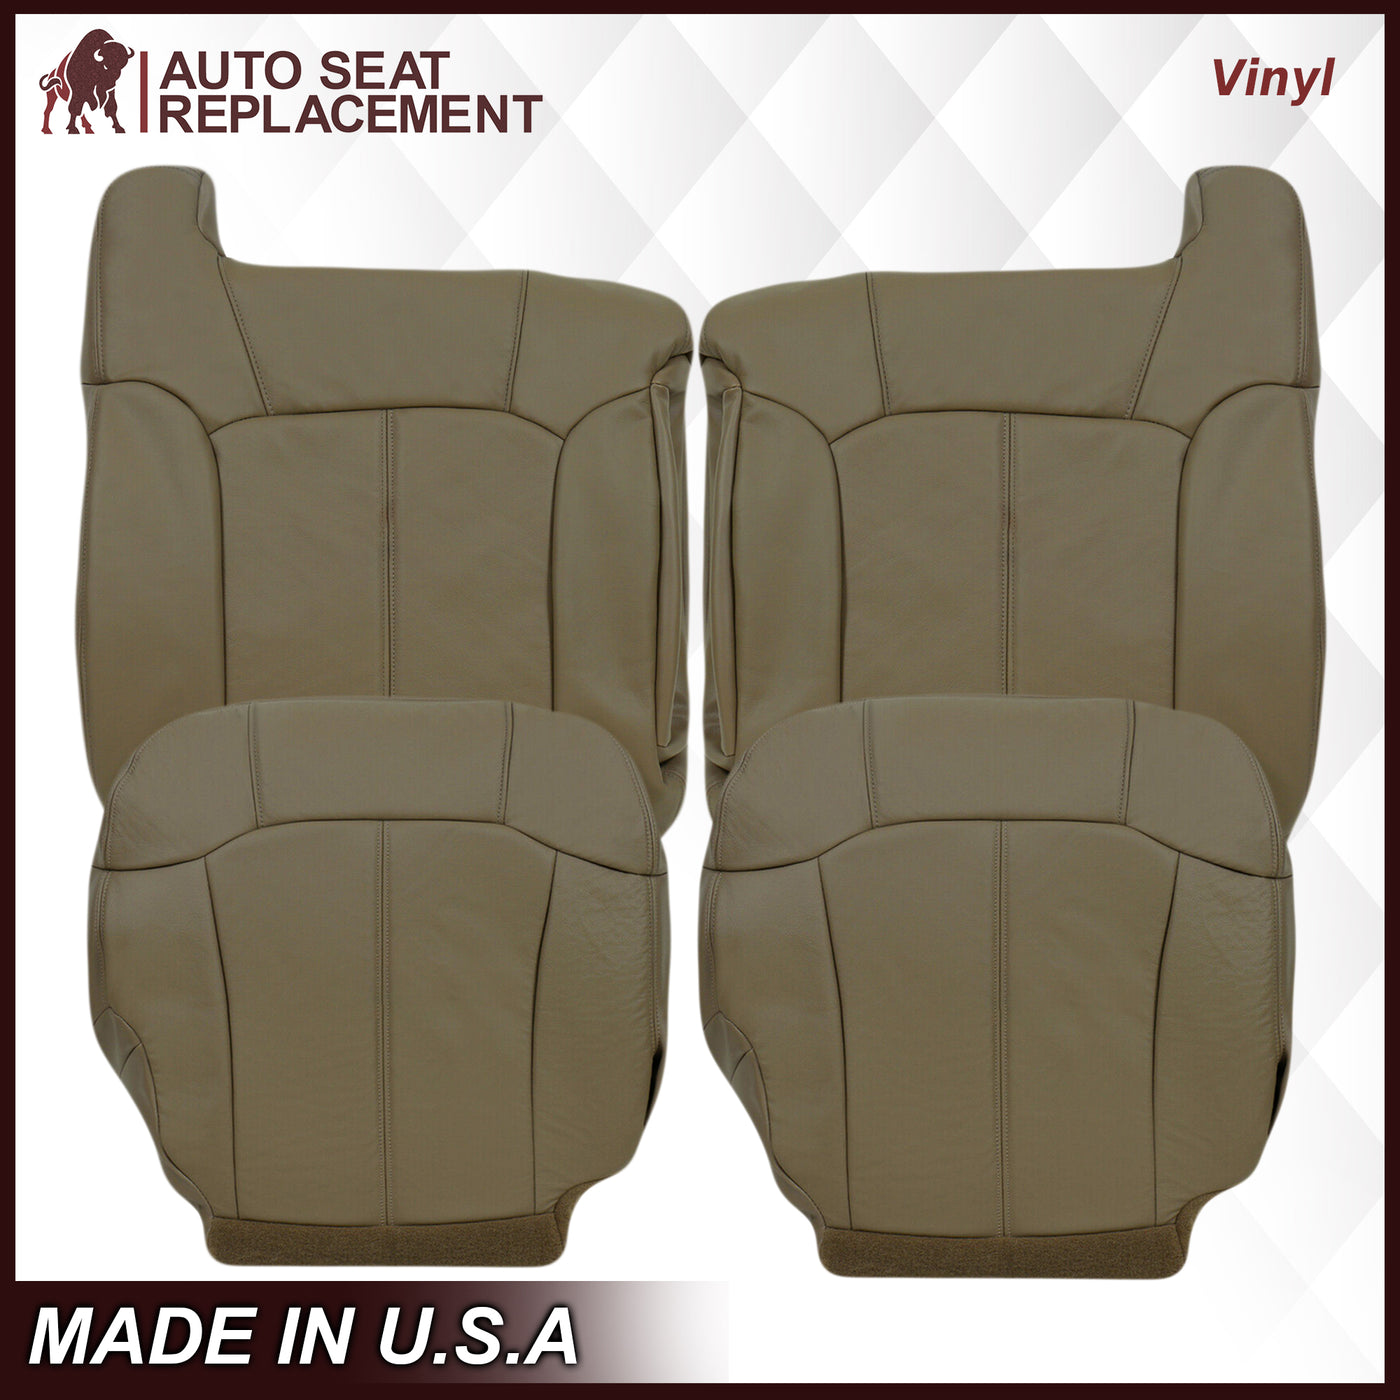 1999-2002 Chevy Silverado Seat Cover in Medium Dark Oak Tan (trim code 672  or 67i)